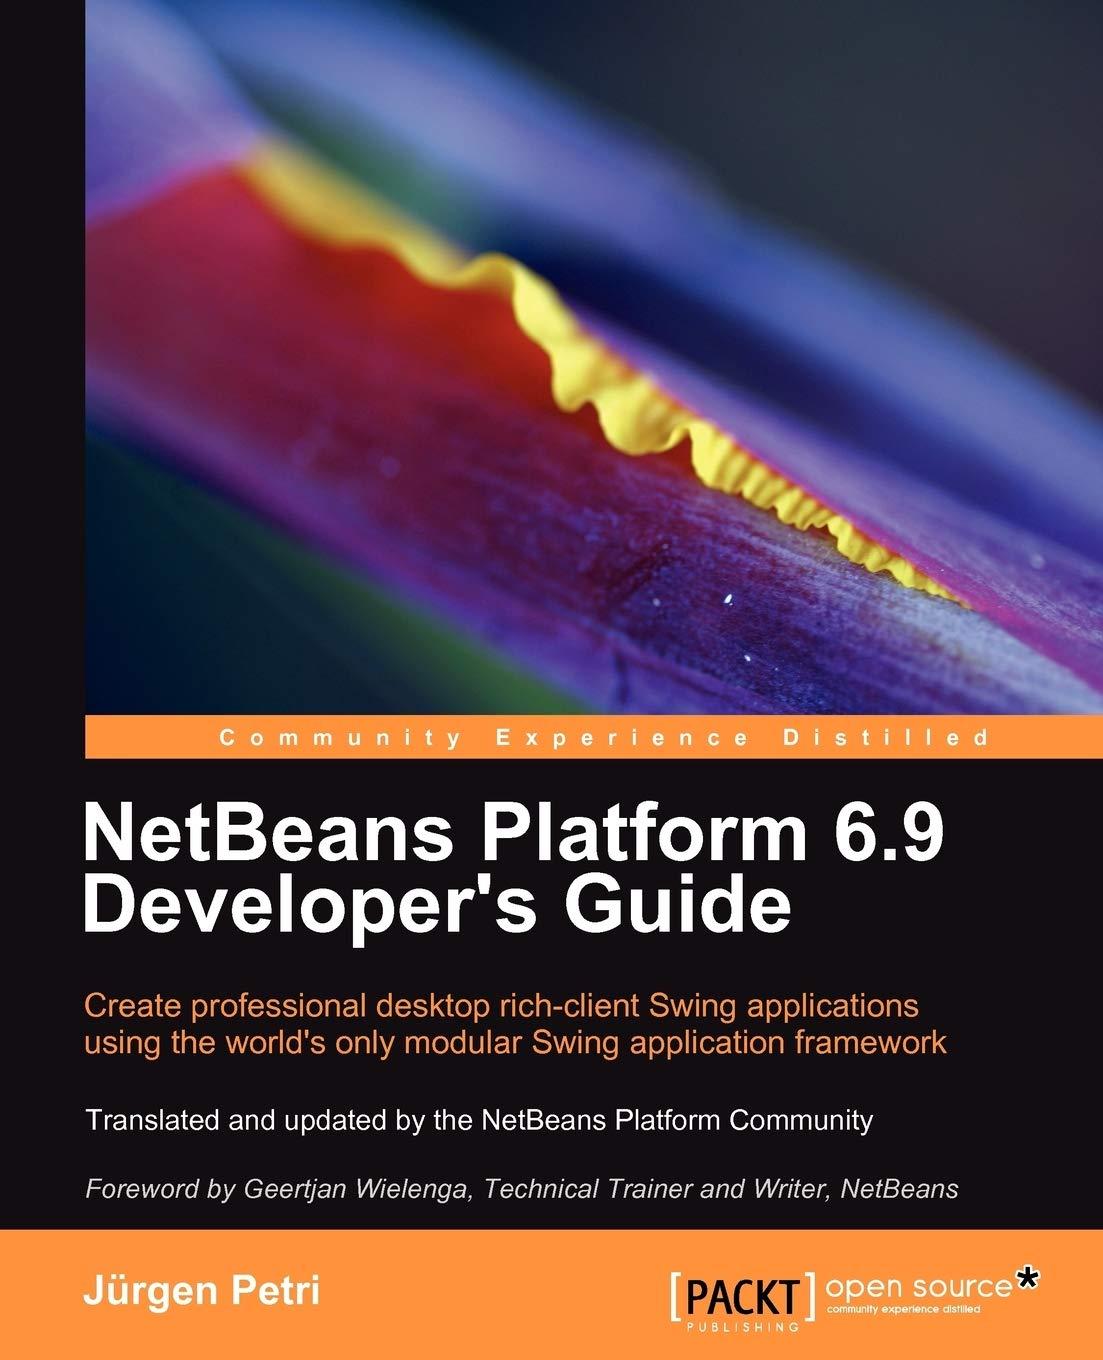 netbeans platform 6.9 developer's guide 1st edition jürgen petri 1849511764, 978-1849511766